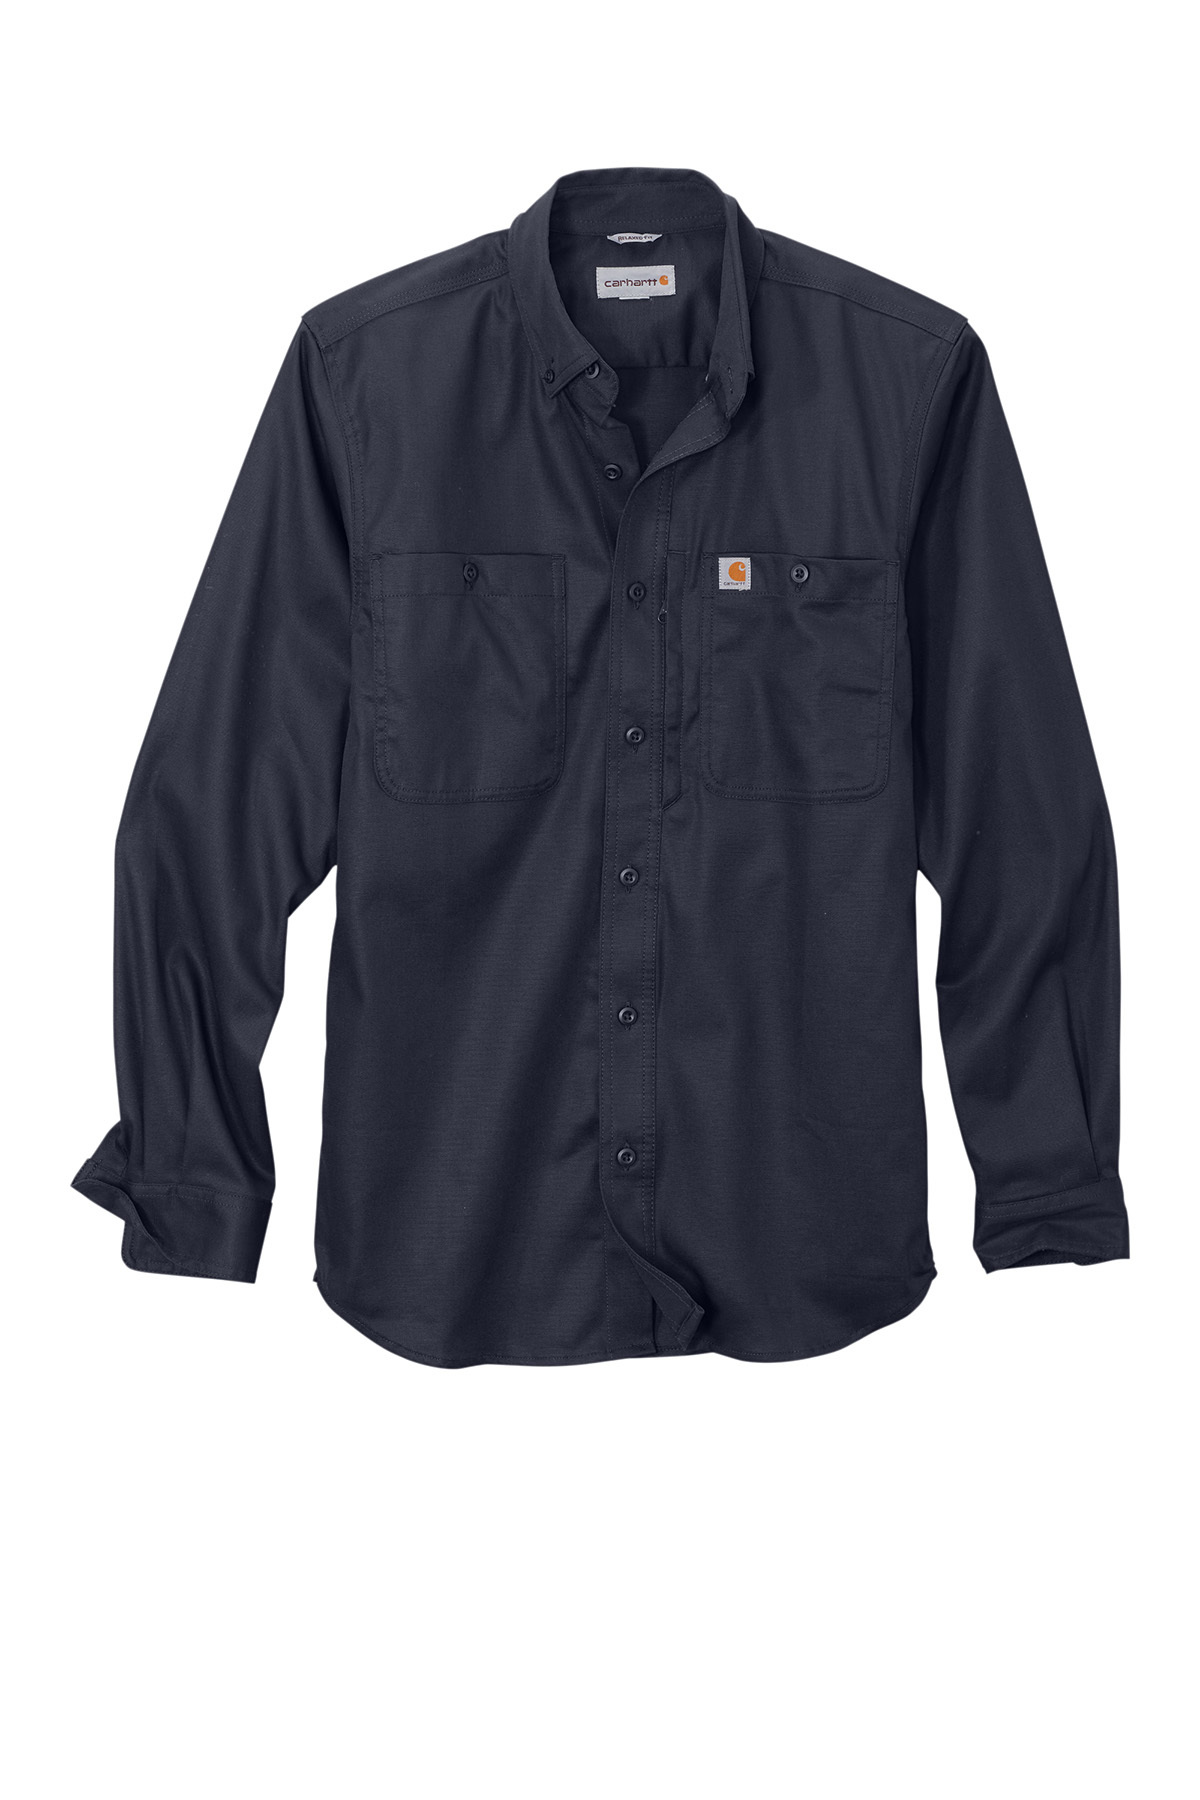 Carhartt Rugged Professional Shirt | Product Sleeve Long | SanMar Series